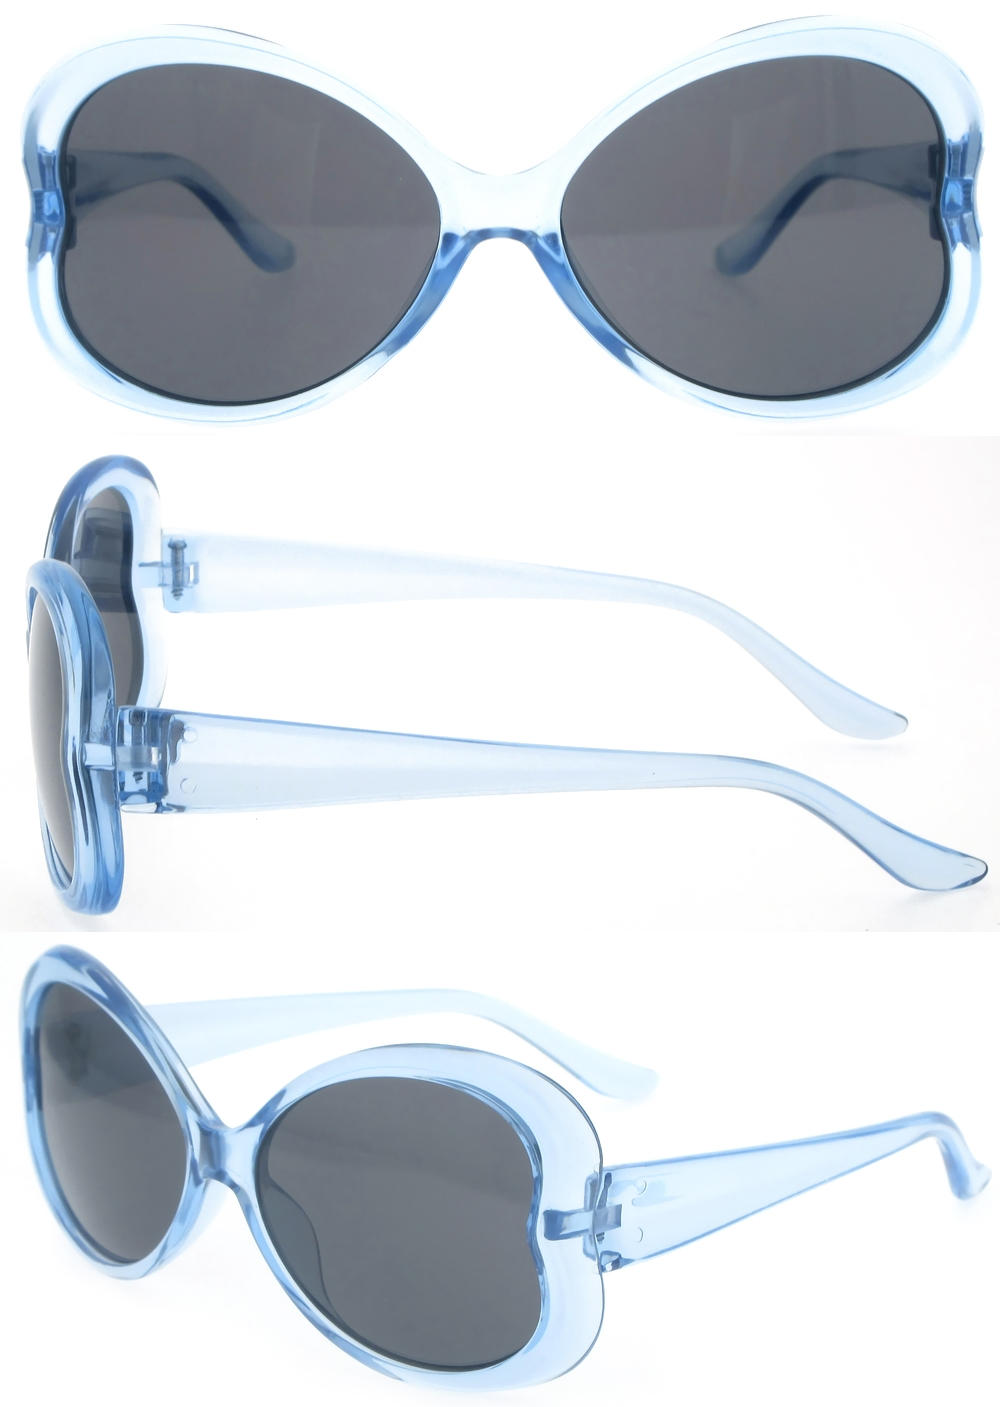 Dachuan Optical DSPK342025 China Manufacture Factory New Fashion Oversized Unisex Kids Sunglasses with Screw Hinge (1)